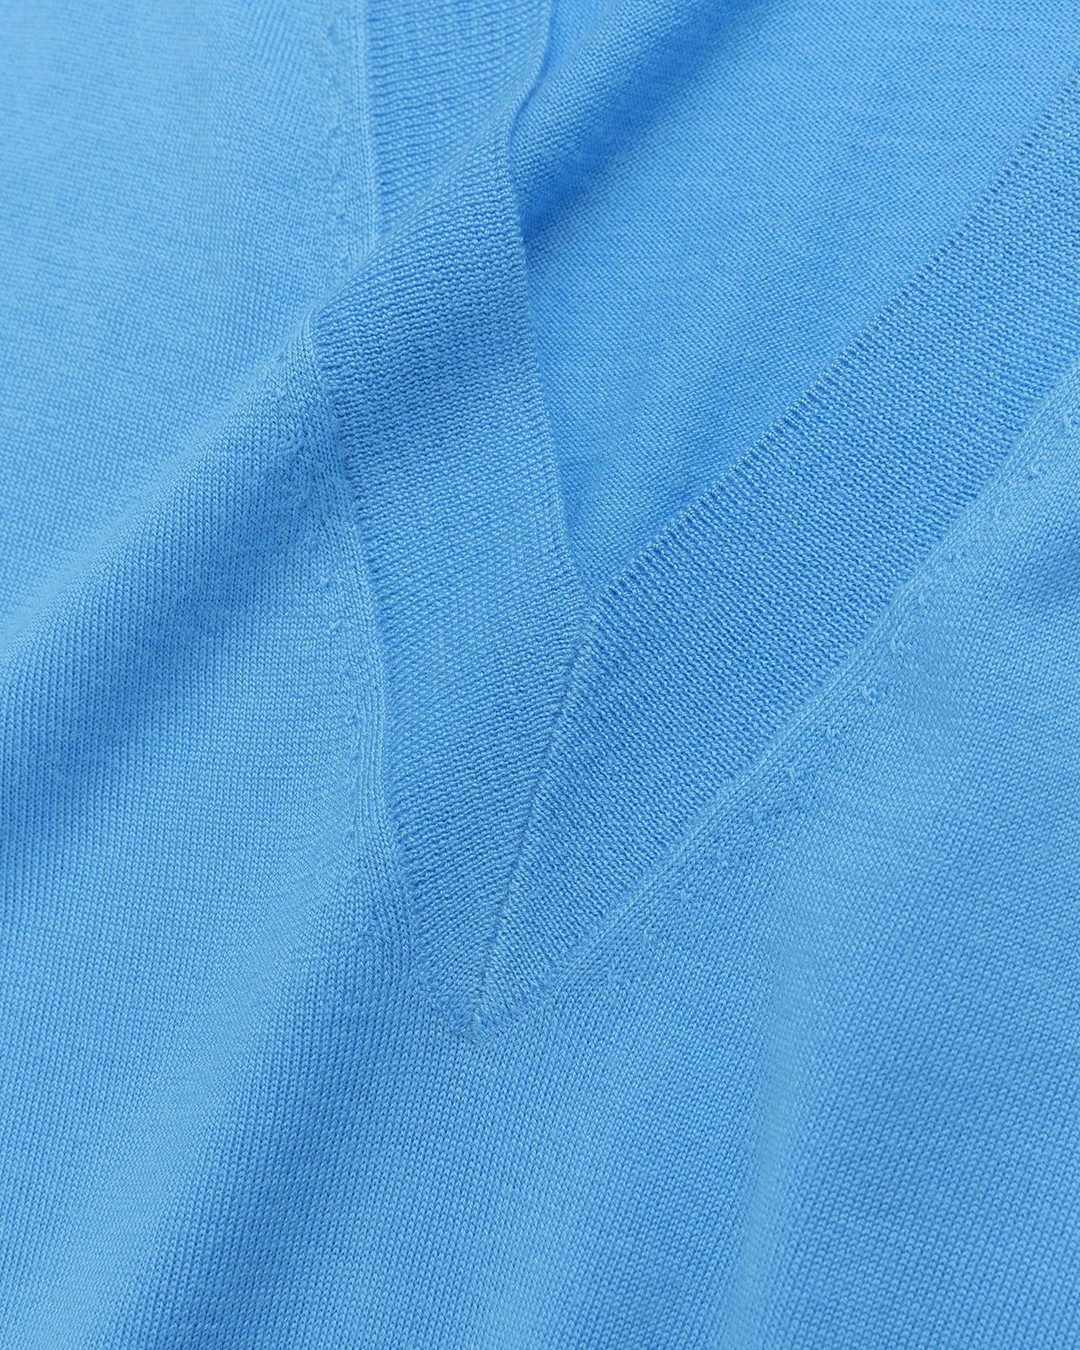 Dries van Noten – Merino Sleeveless Sweater Madonna - Gilets - Blue - Image 4